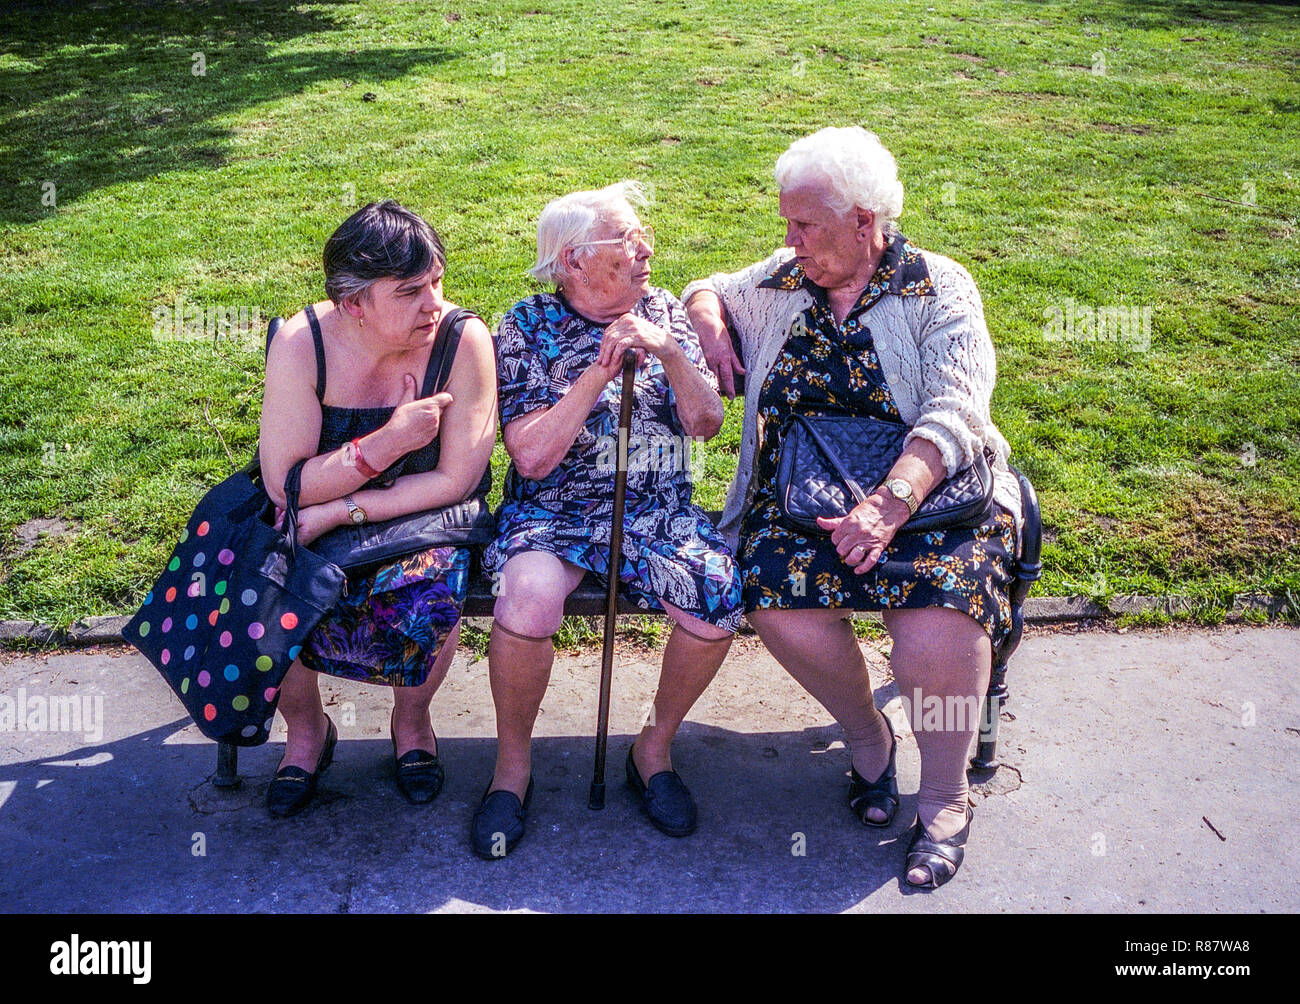 Tre donne anziane su una panchina, anziani seduti su una panchina in un bastone da parco Repubblica Ceca donne anziane anziane anziane generazioni più anziane Foto Stock